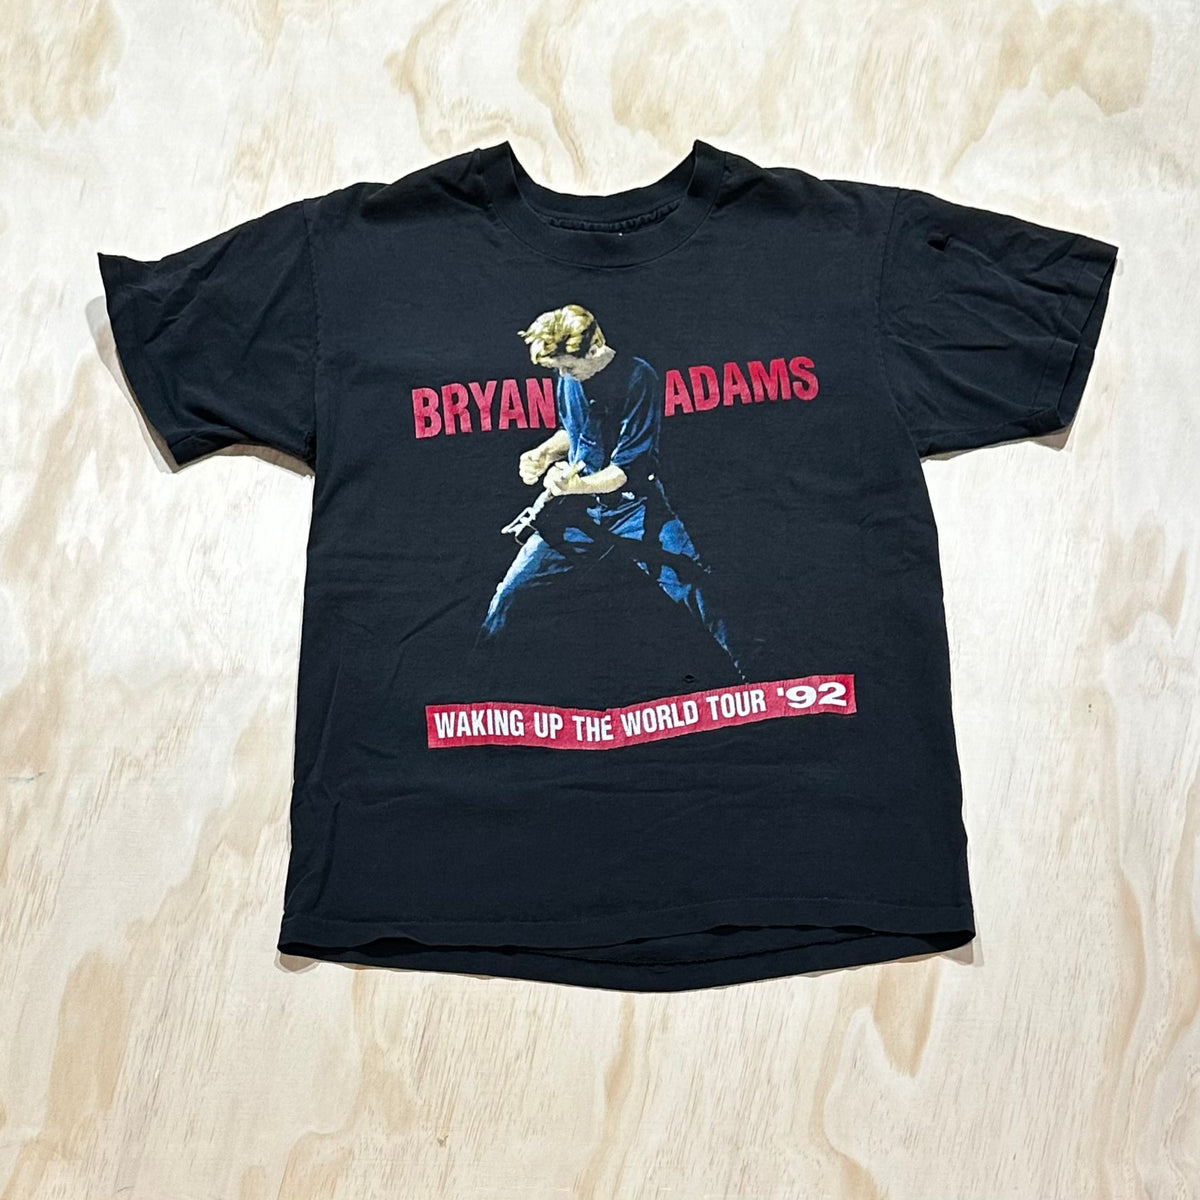 Vintage 90s Ryan Adams Tour Shirt Waking Up The World Tour ‘92 size XL